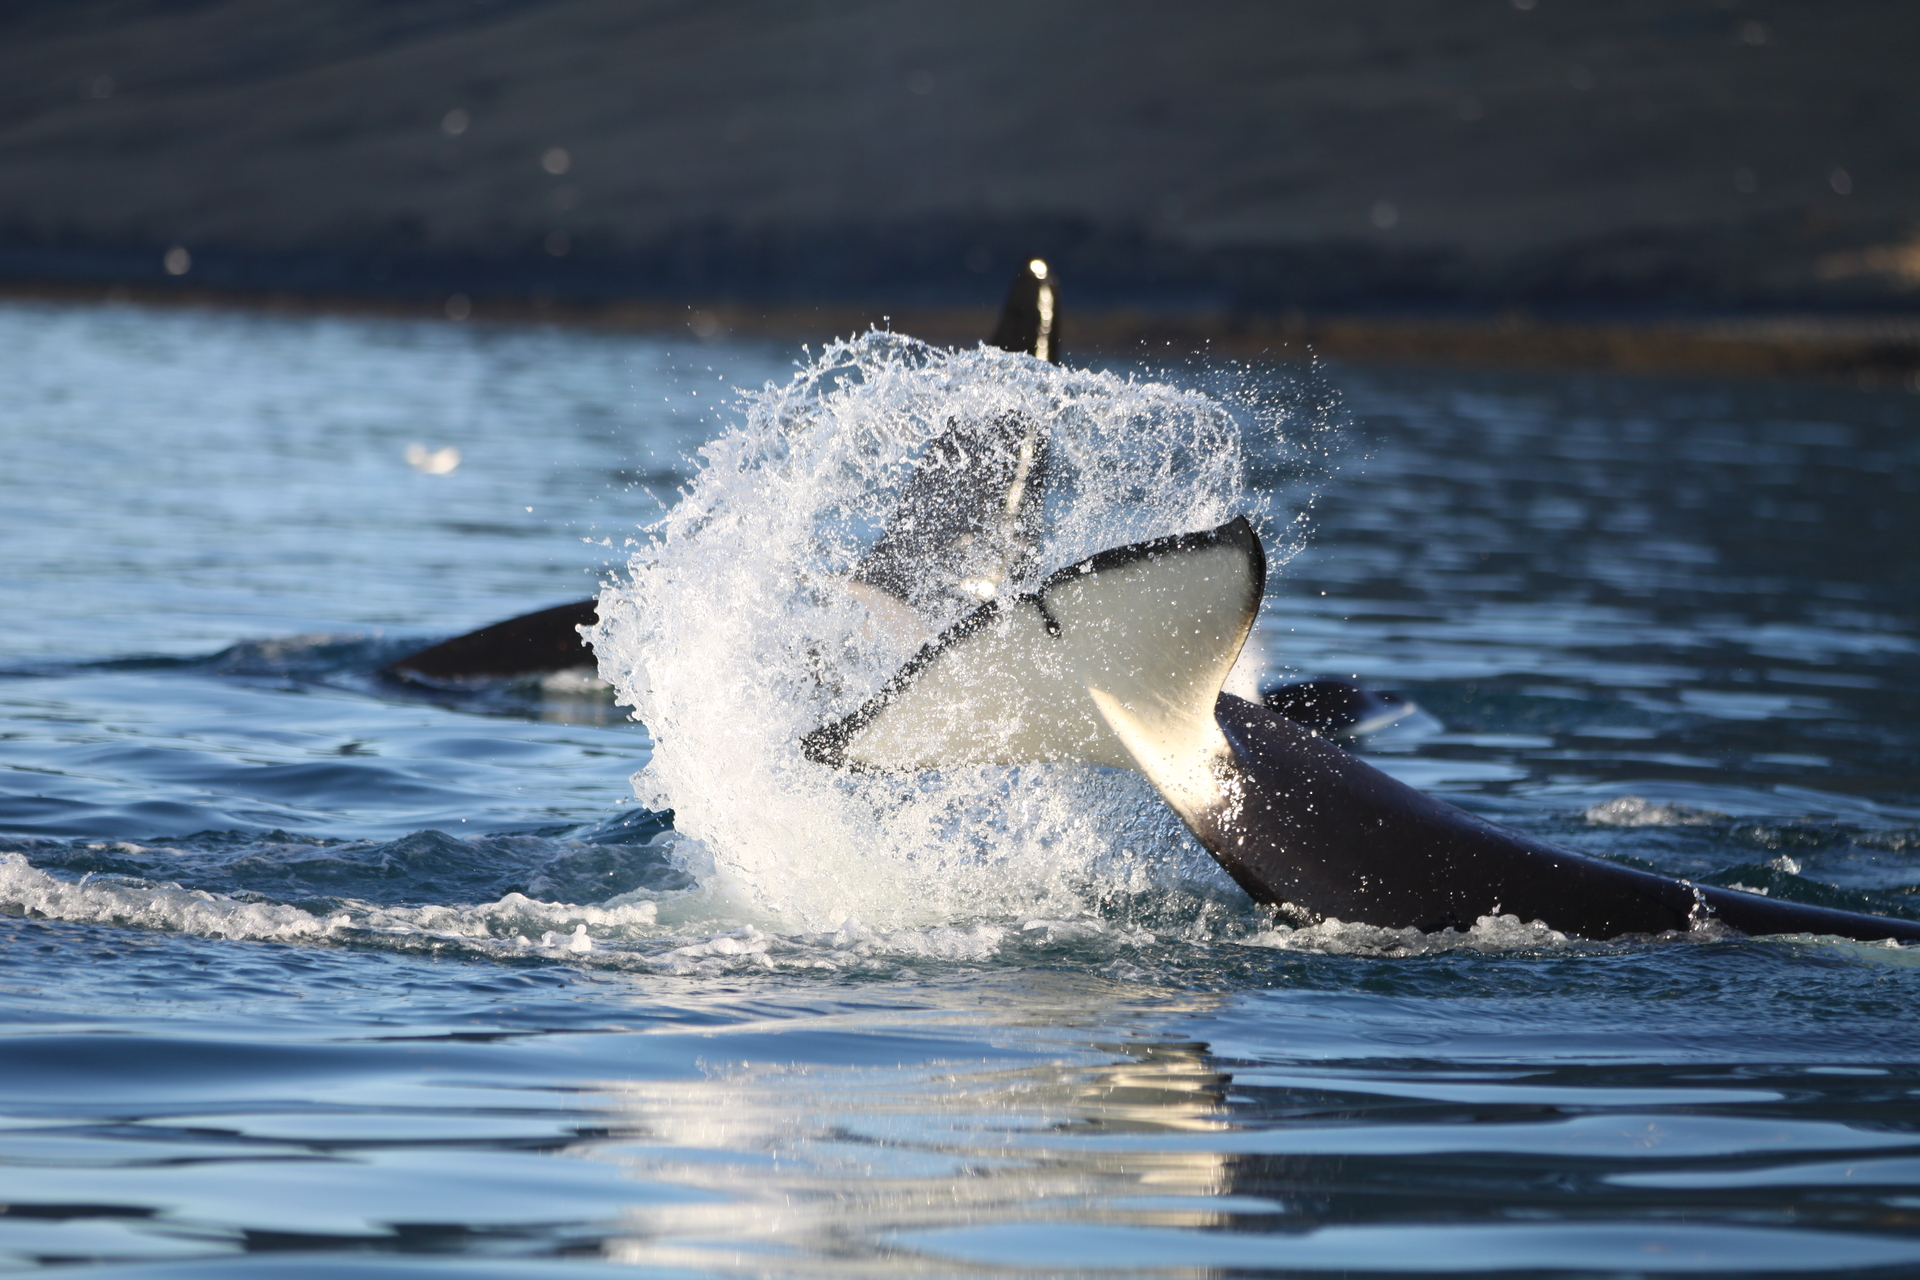 Killer whale (Orcinus orca)